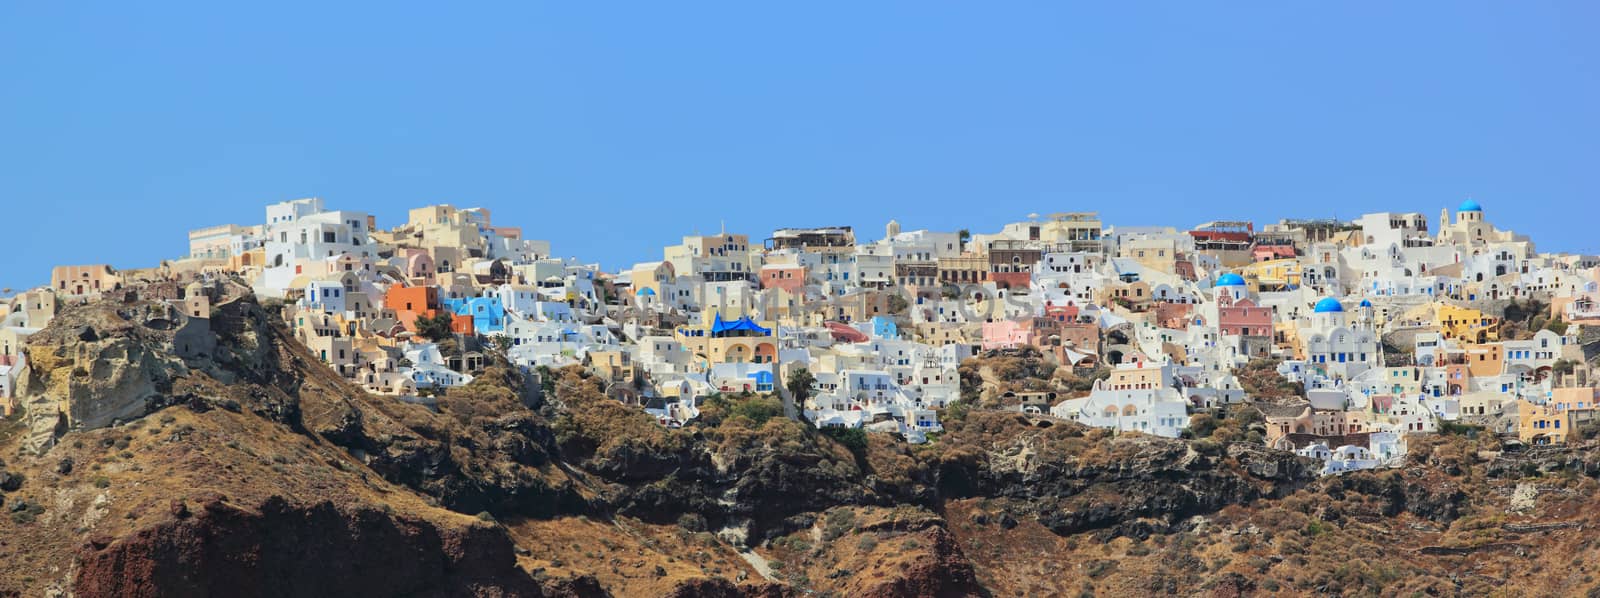 Santorini island Greece by Netfalls